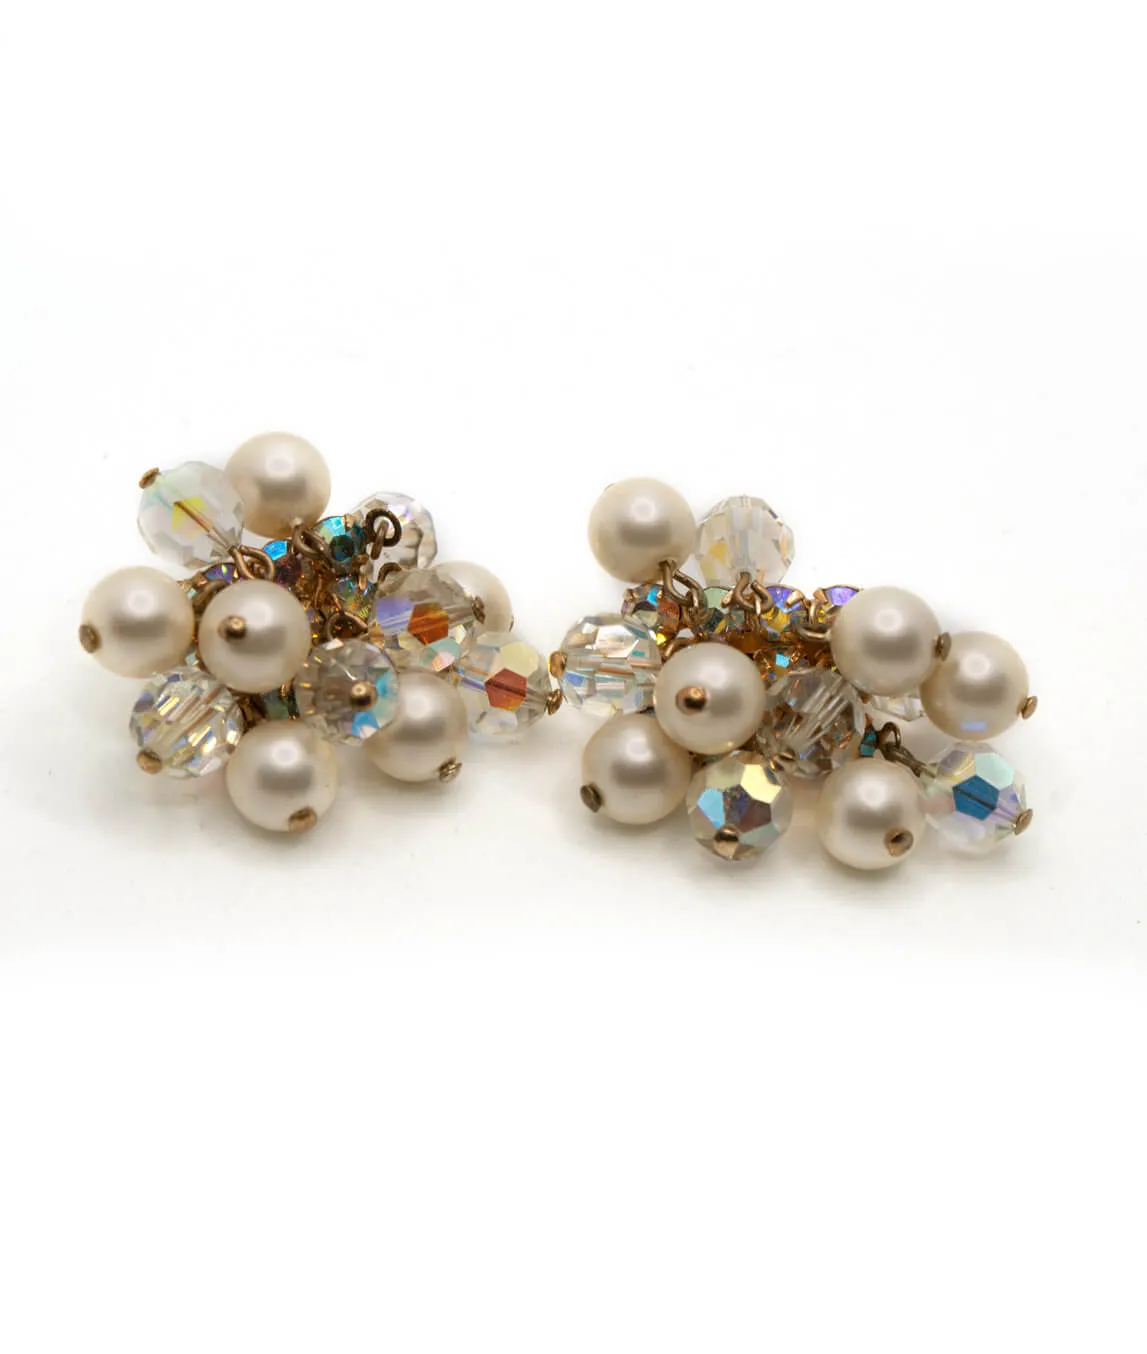 Vintage beaded cha-cha earrings by Kramer